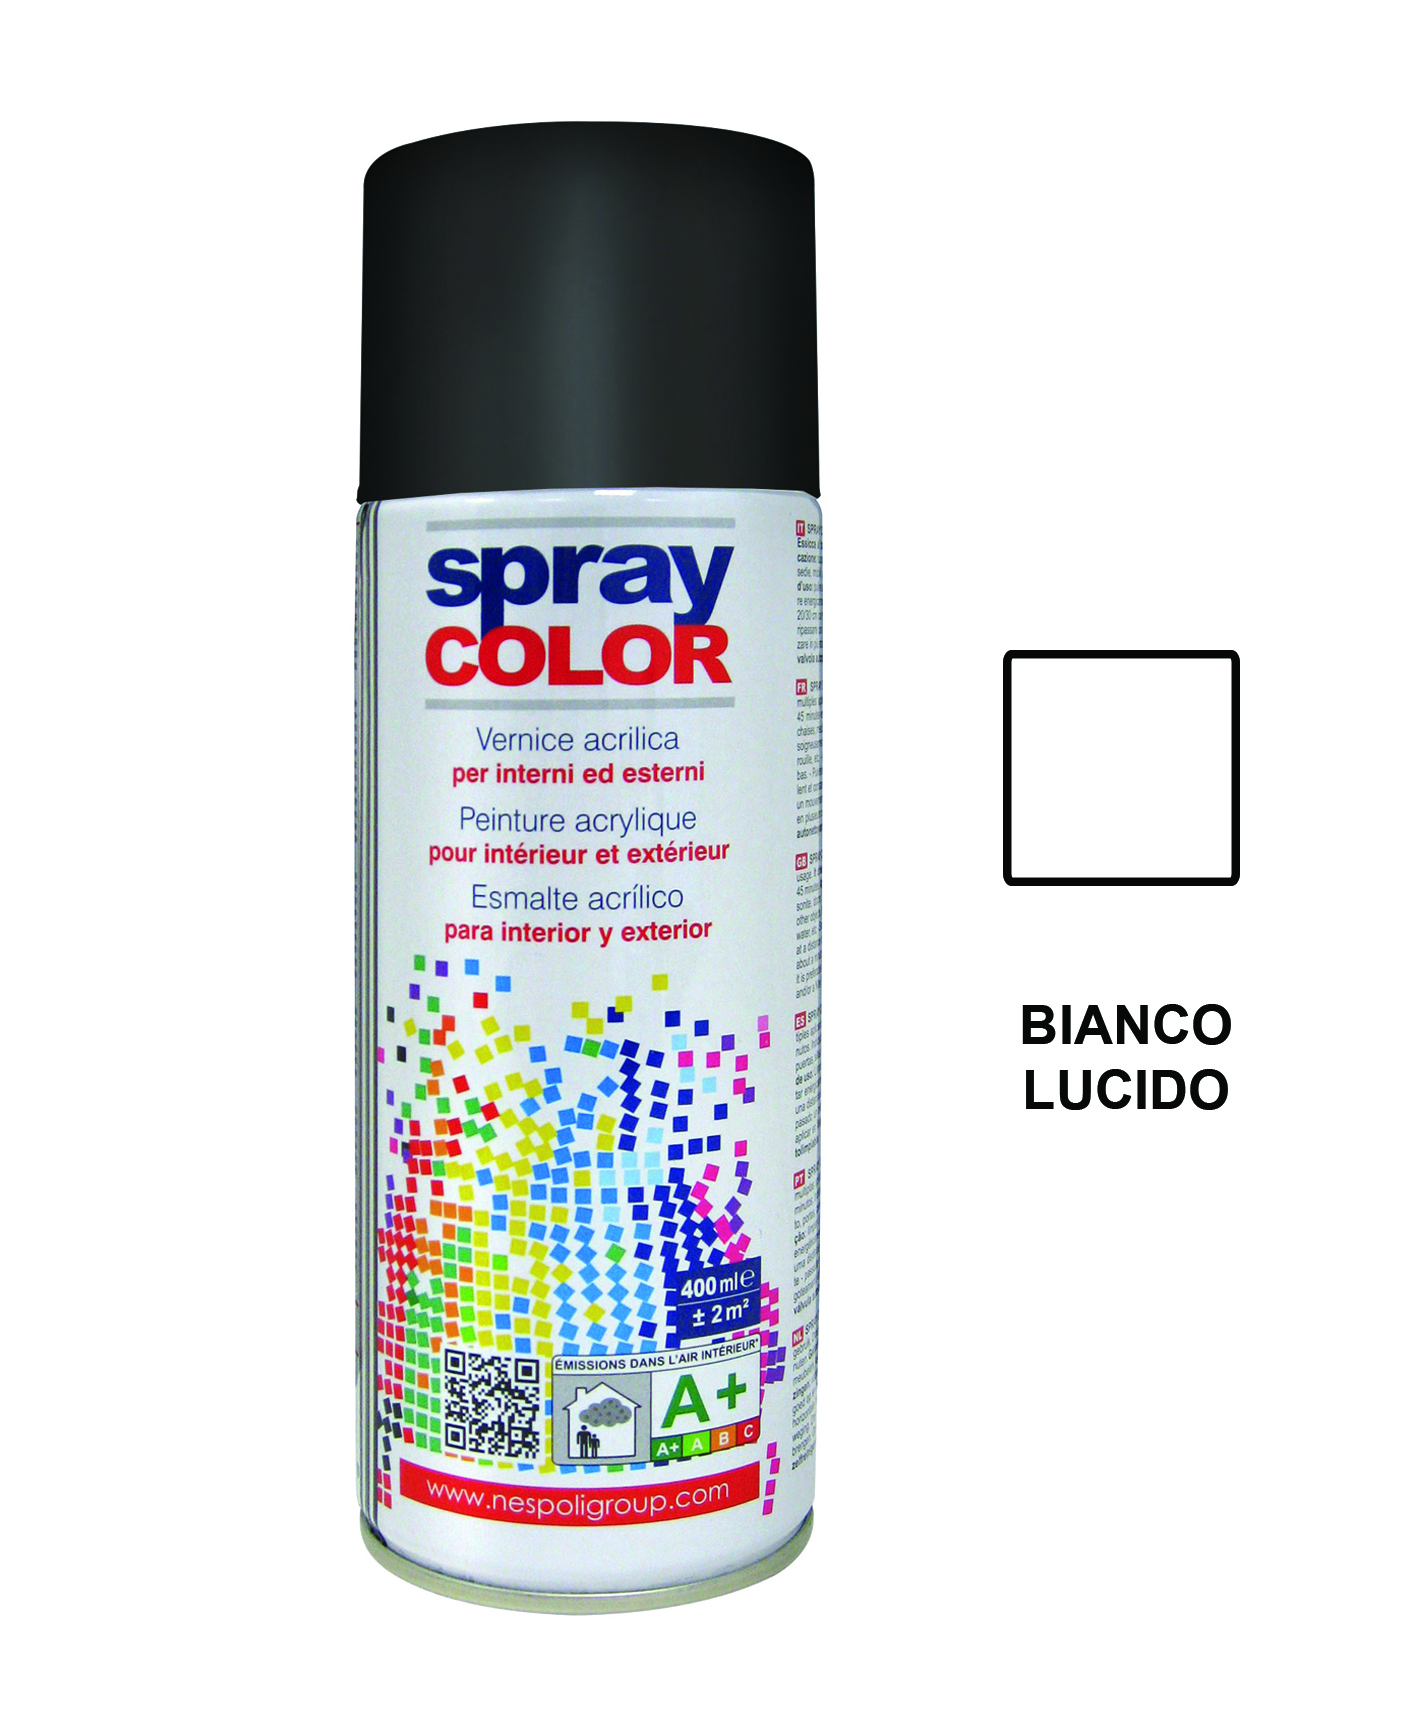 Spraycolor bianco lucido 9010 400ml